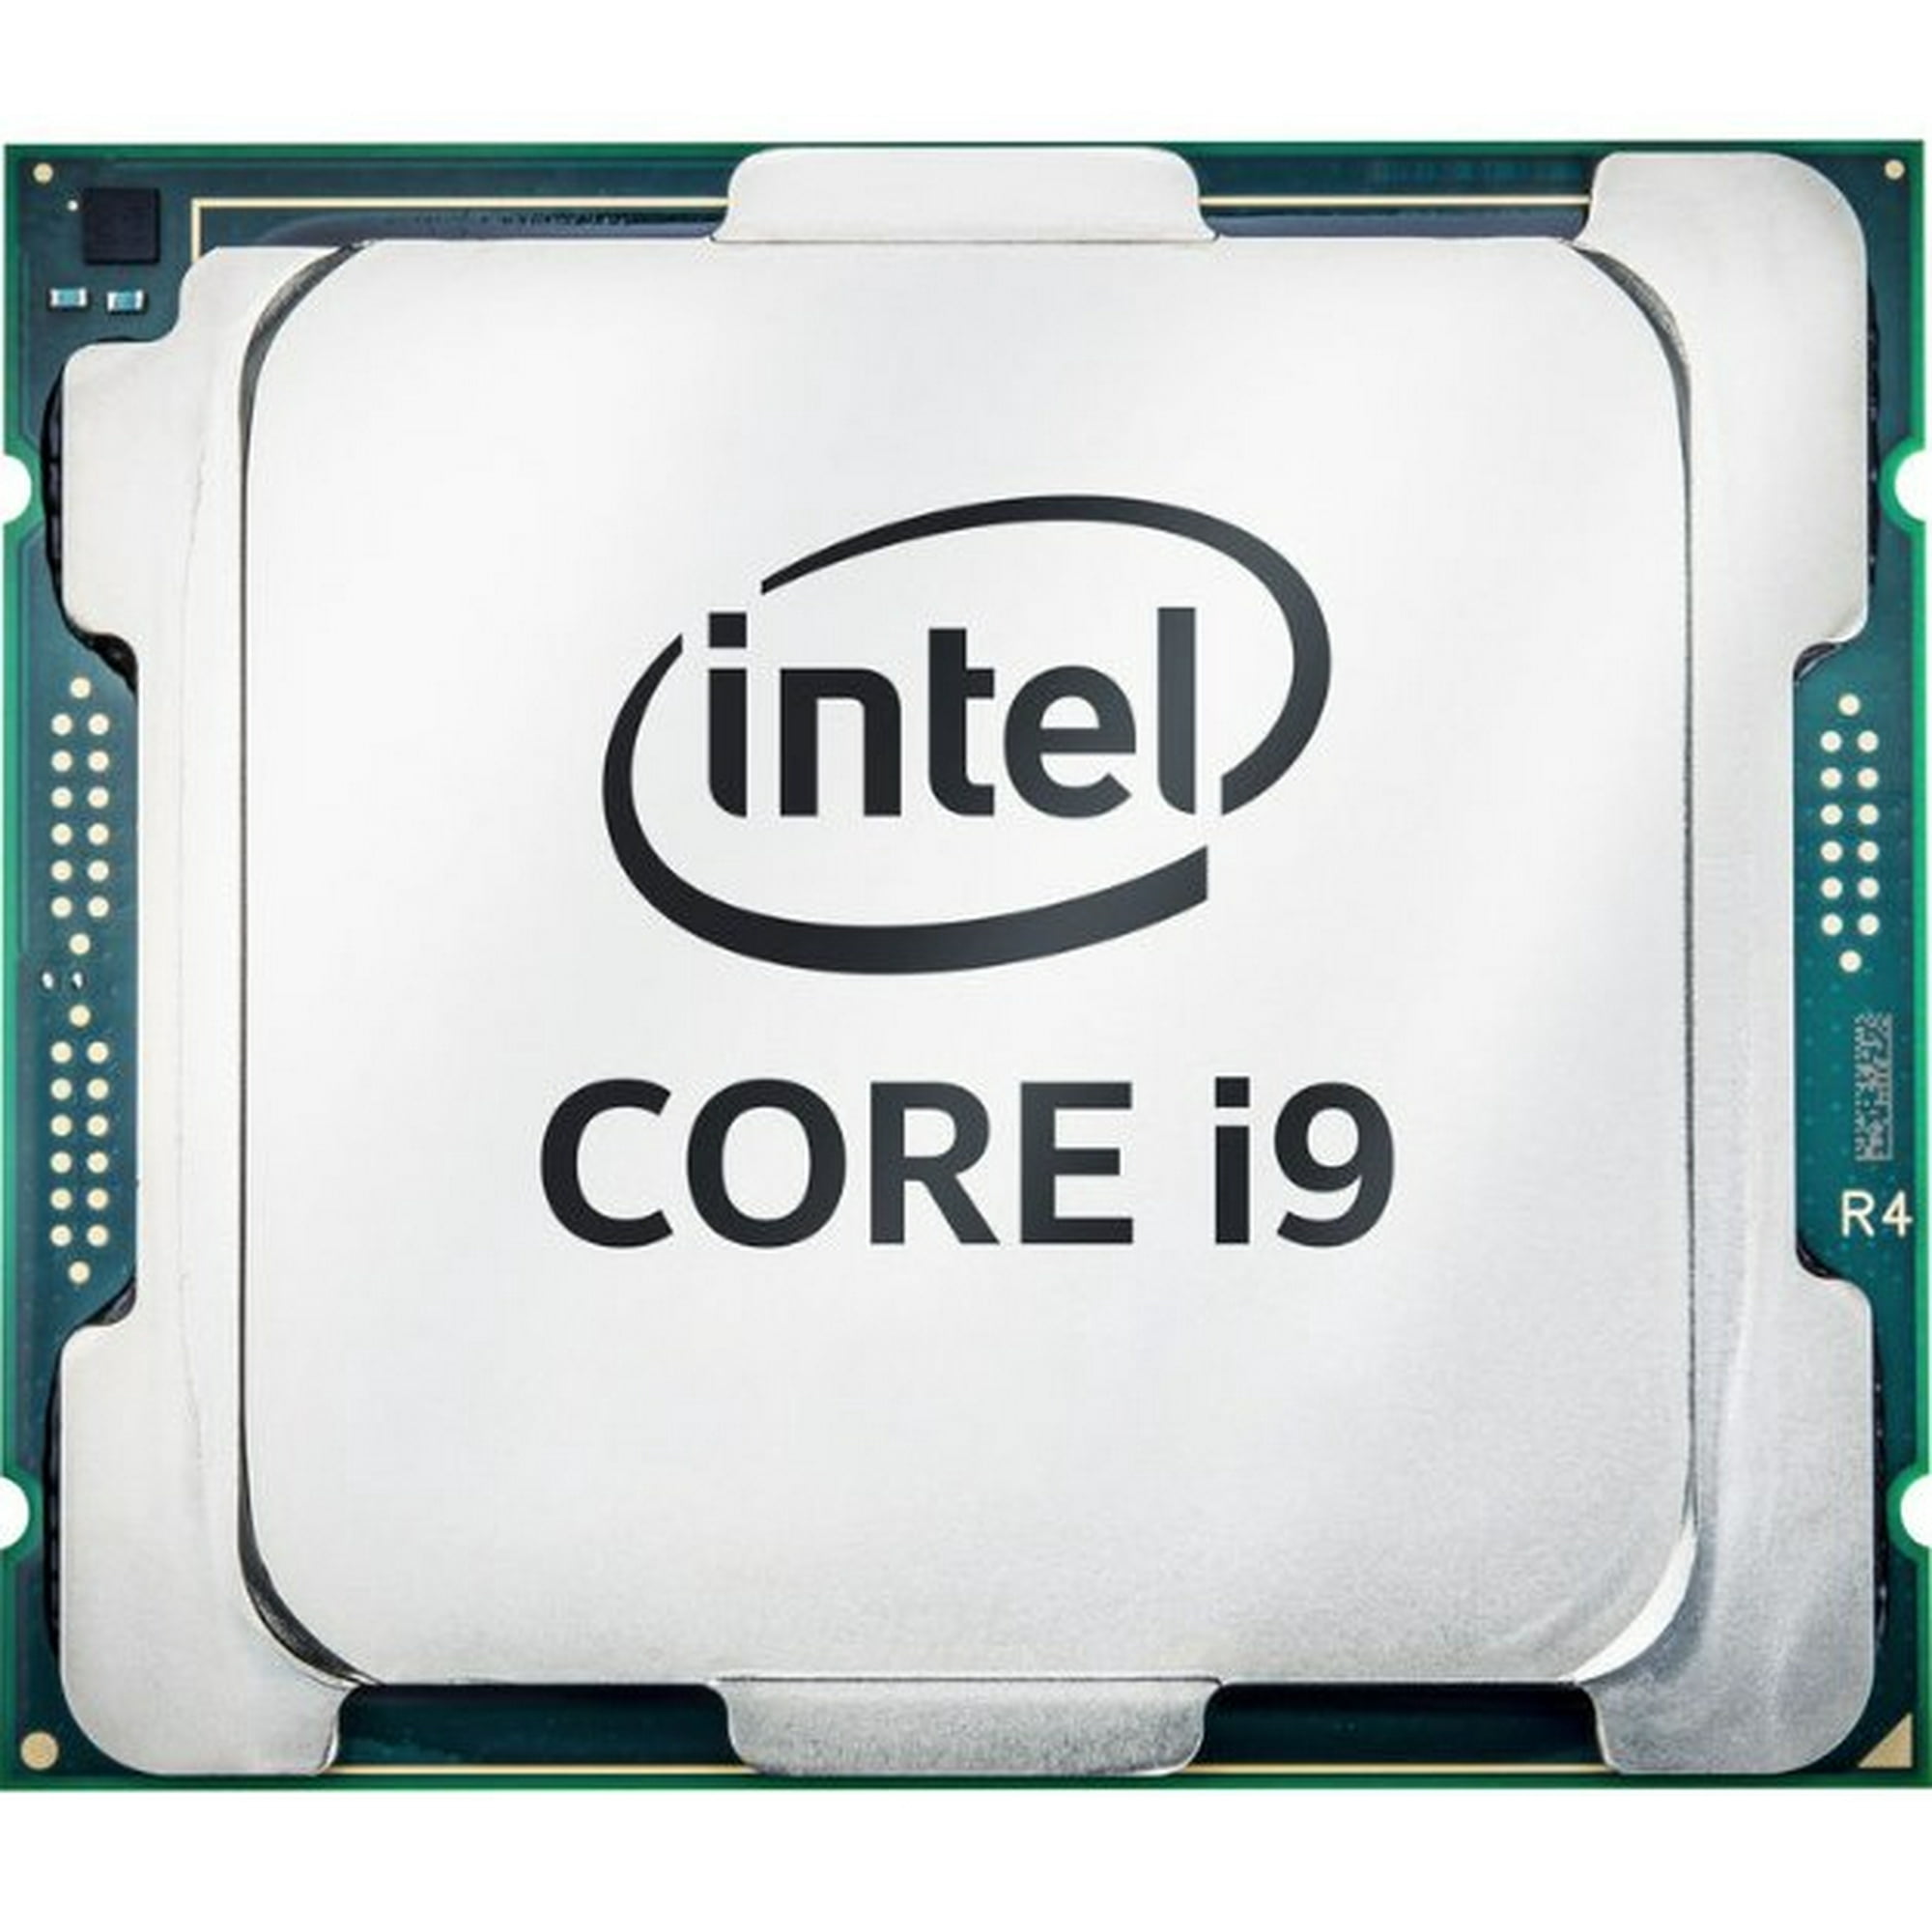 Intel Core i9-9900K Coffee Lake 3.6Ghz 16MB Cache LGA 1151 CPU